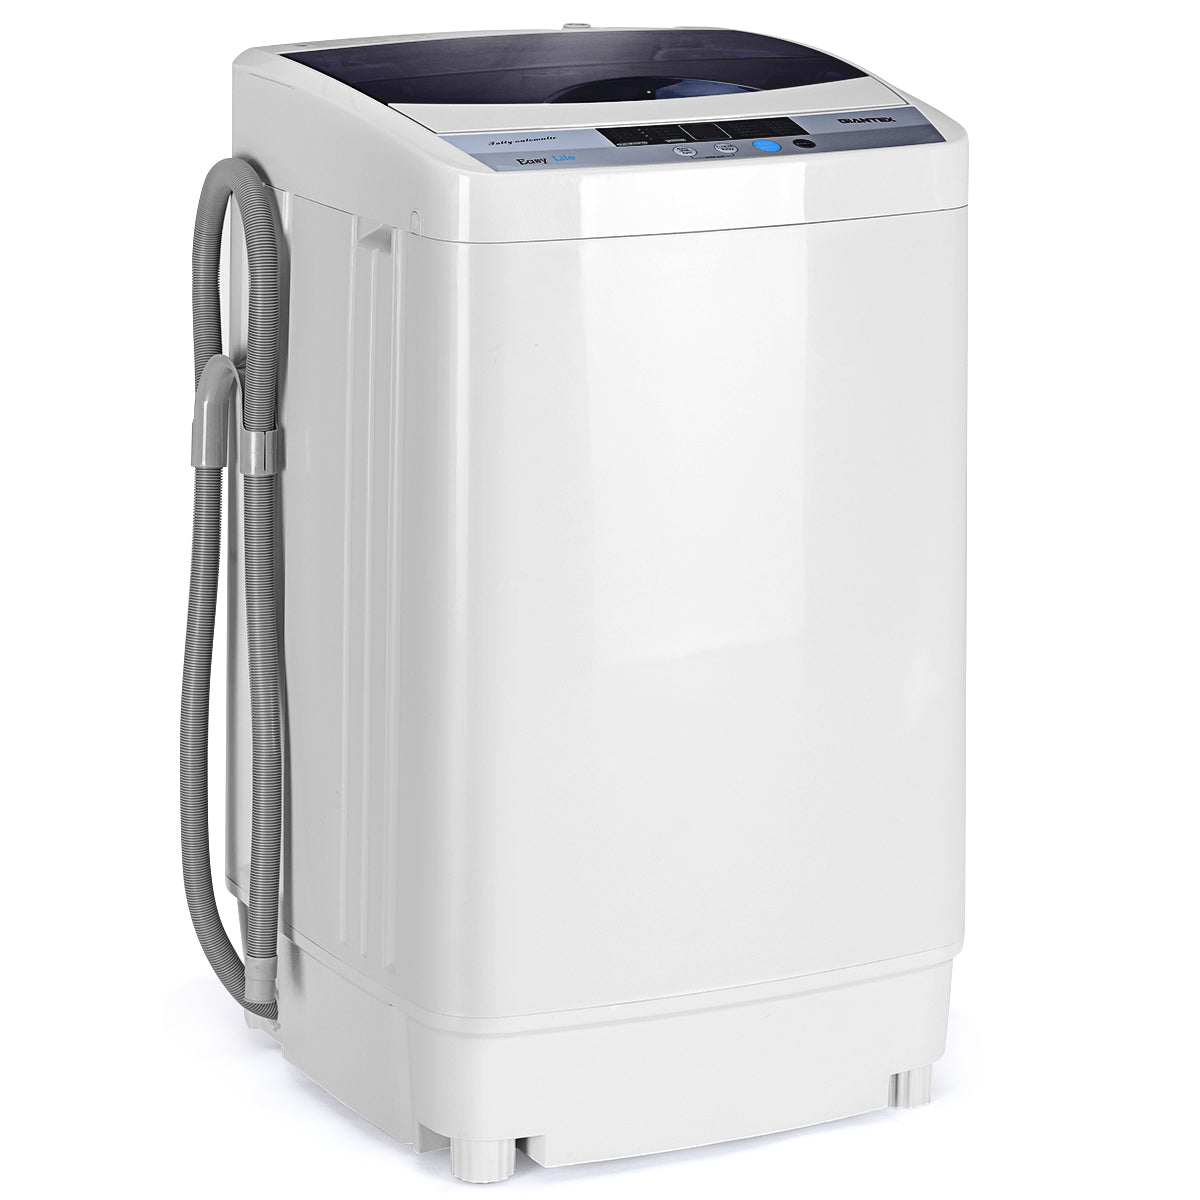 GIANTEX Full-automatic Washing Machine EP23936PI, 6 lbs Washer